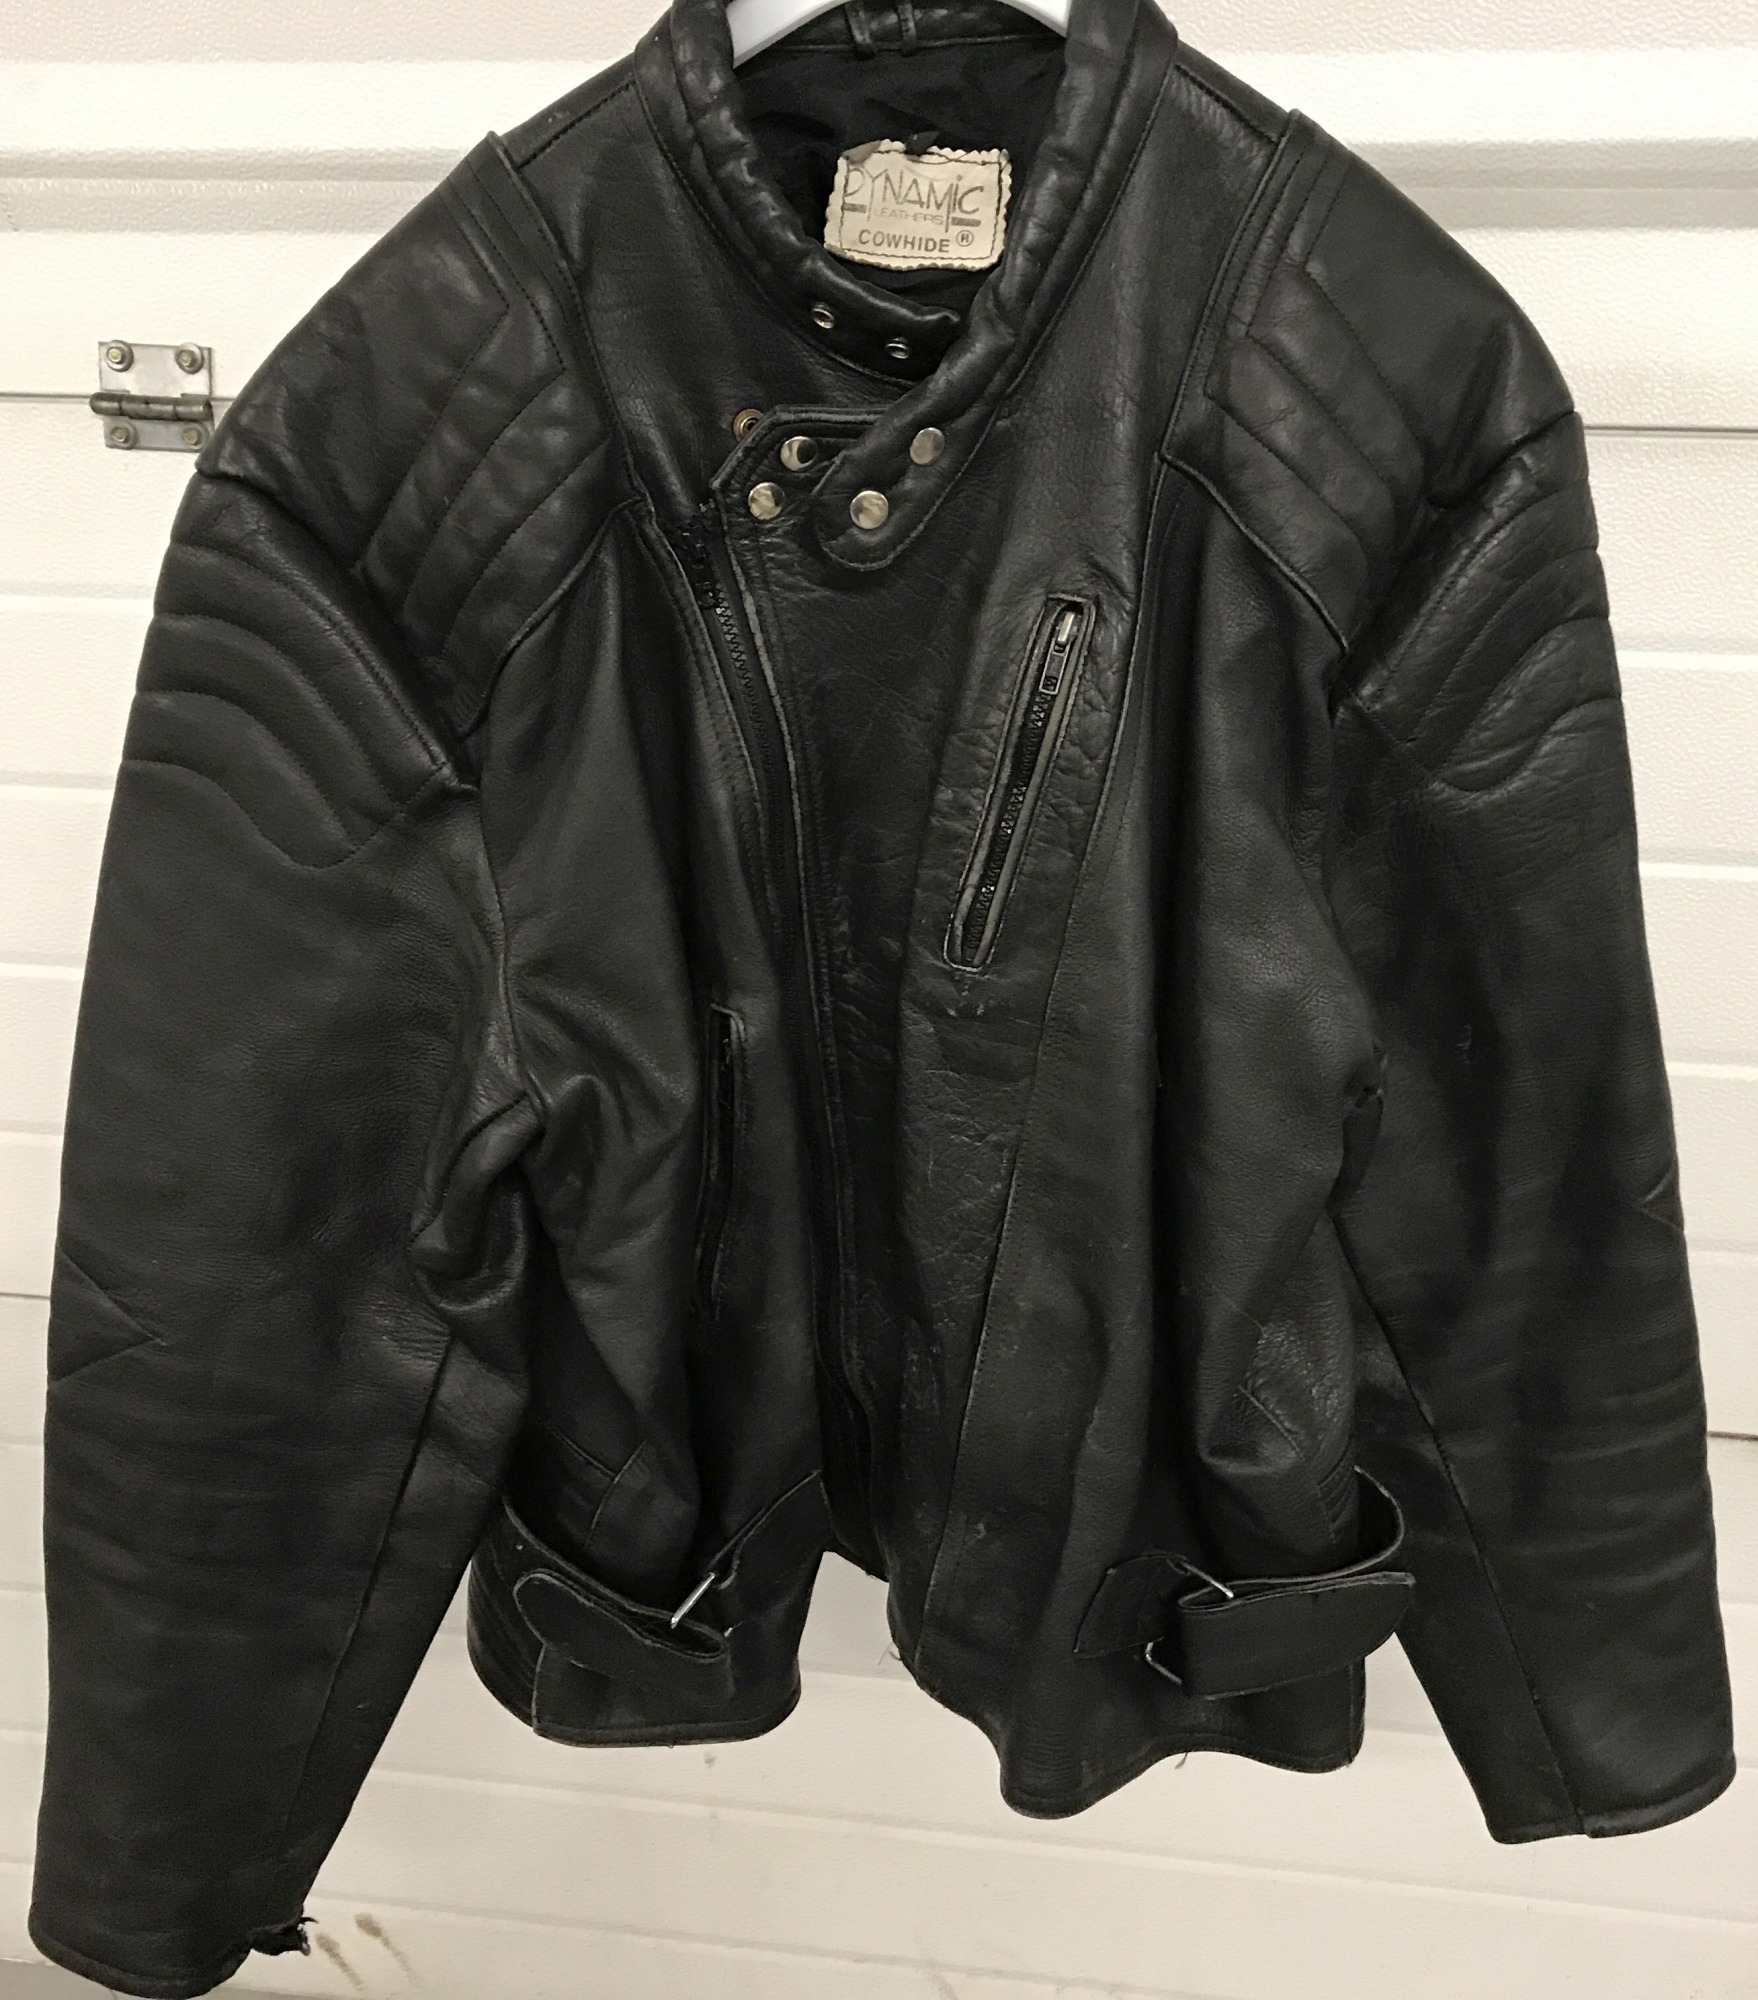 A vintage black leather "Dynamic Leathers" bikers jacket.